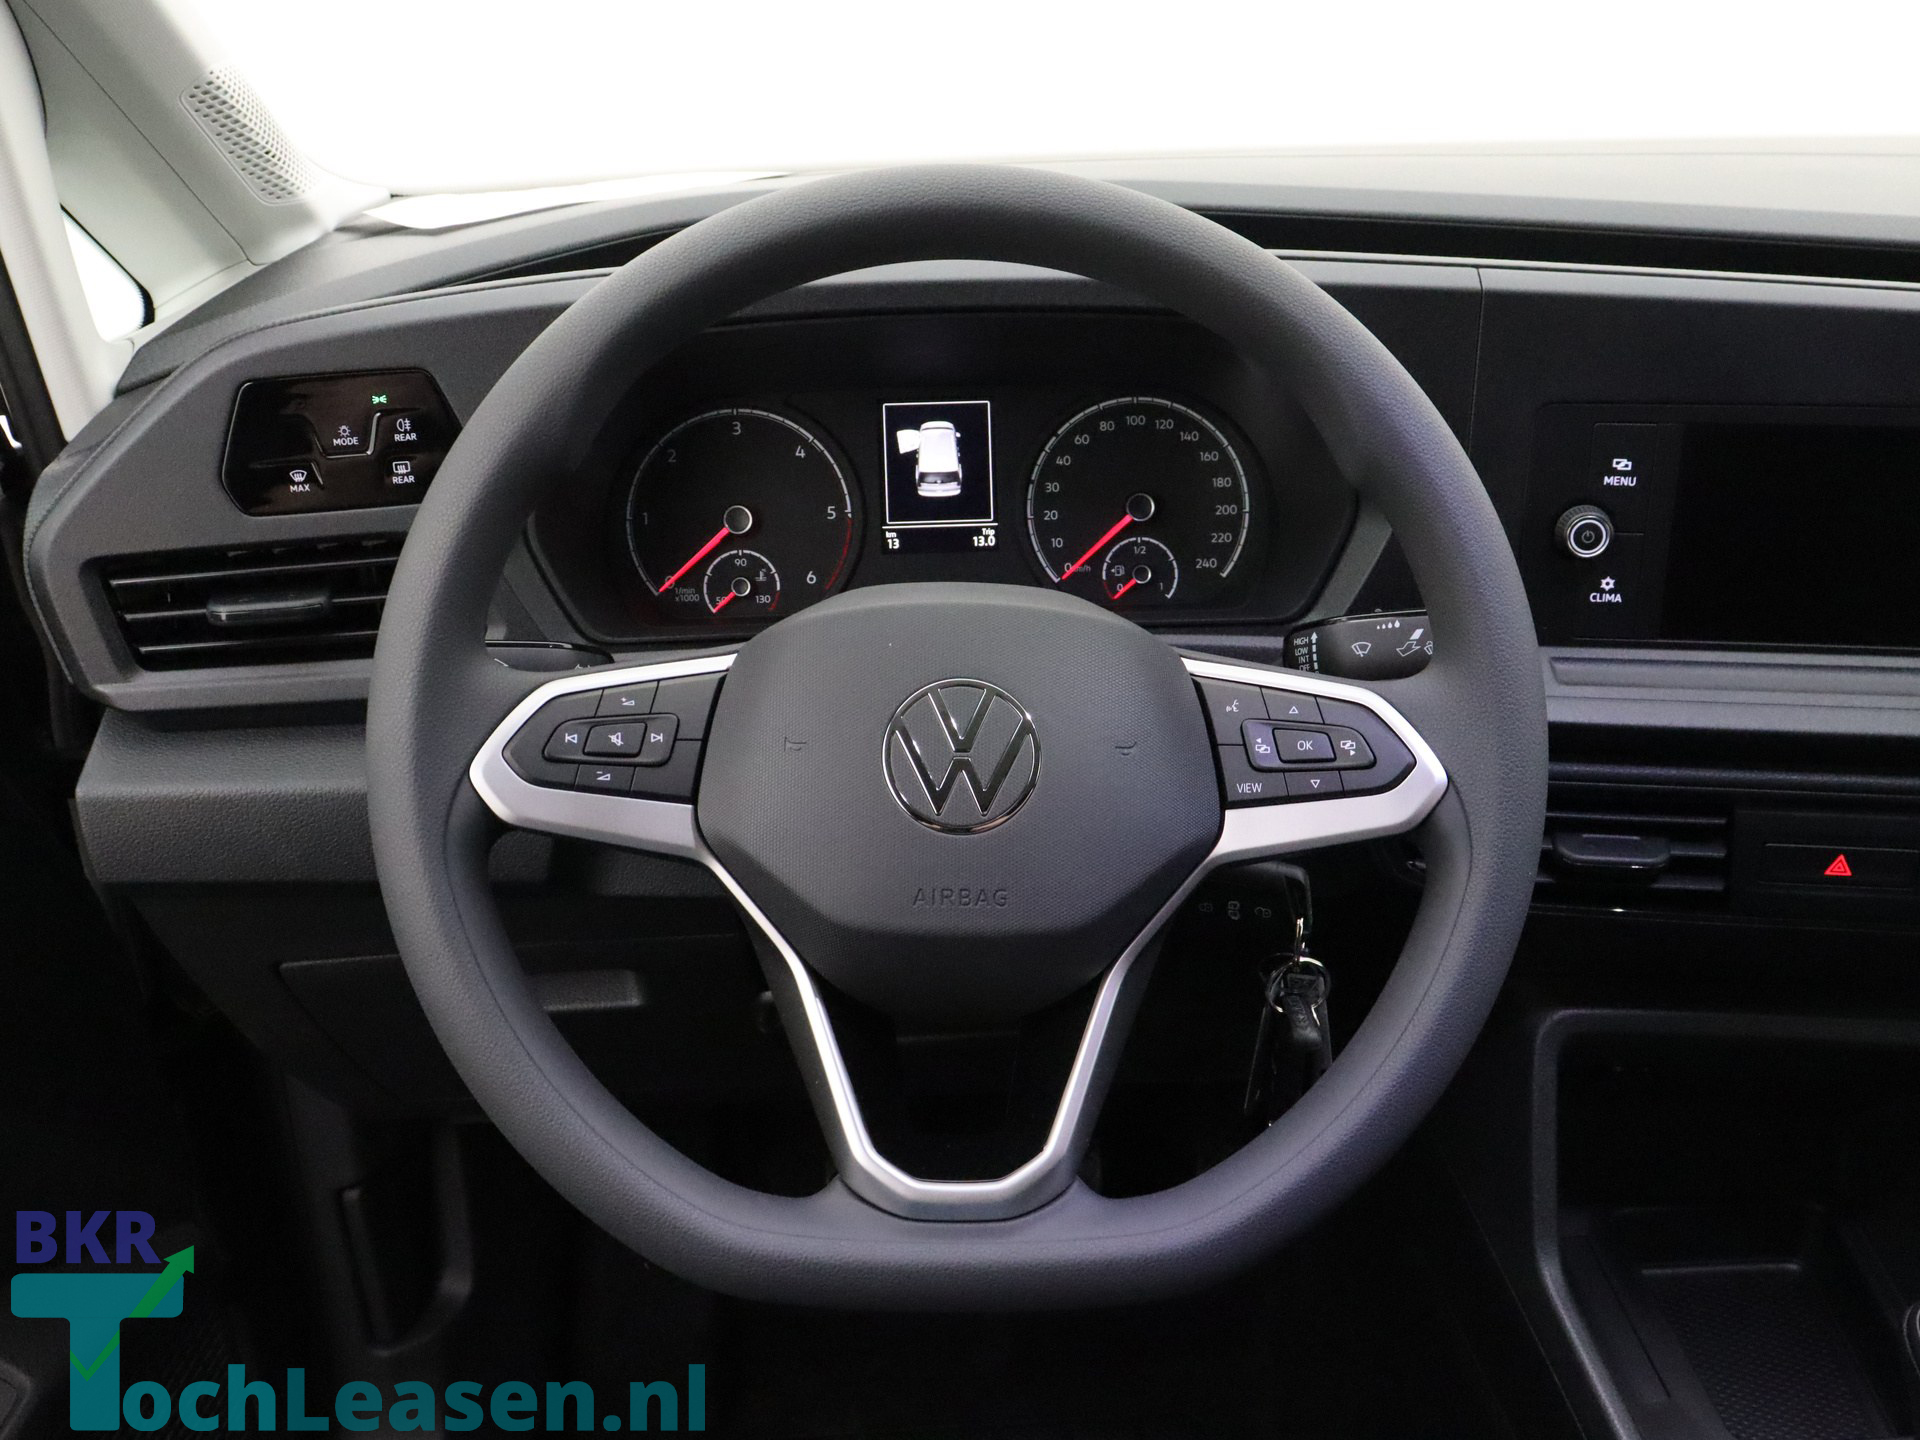 BKR toch leasen - Volkswagen Caddy - Grijs 4